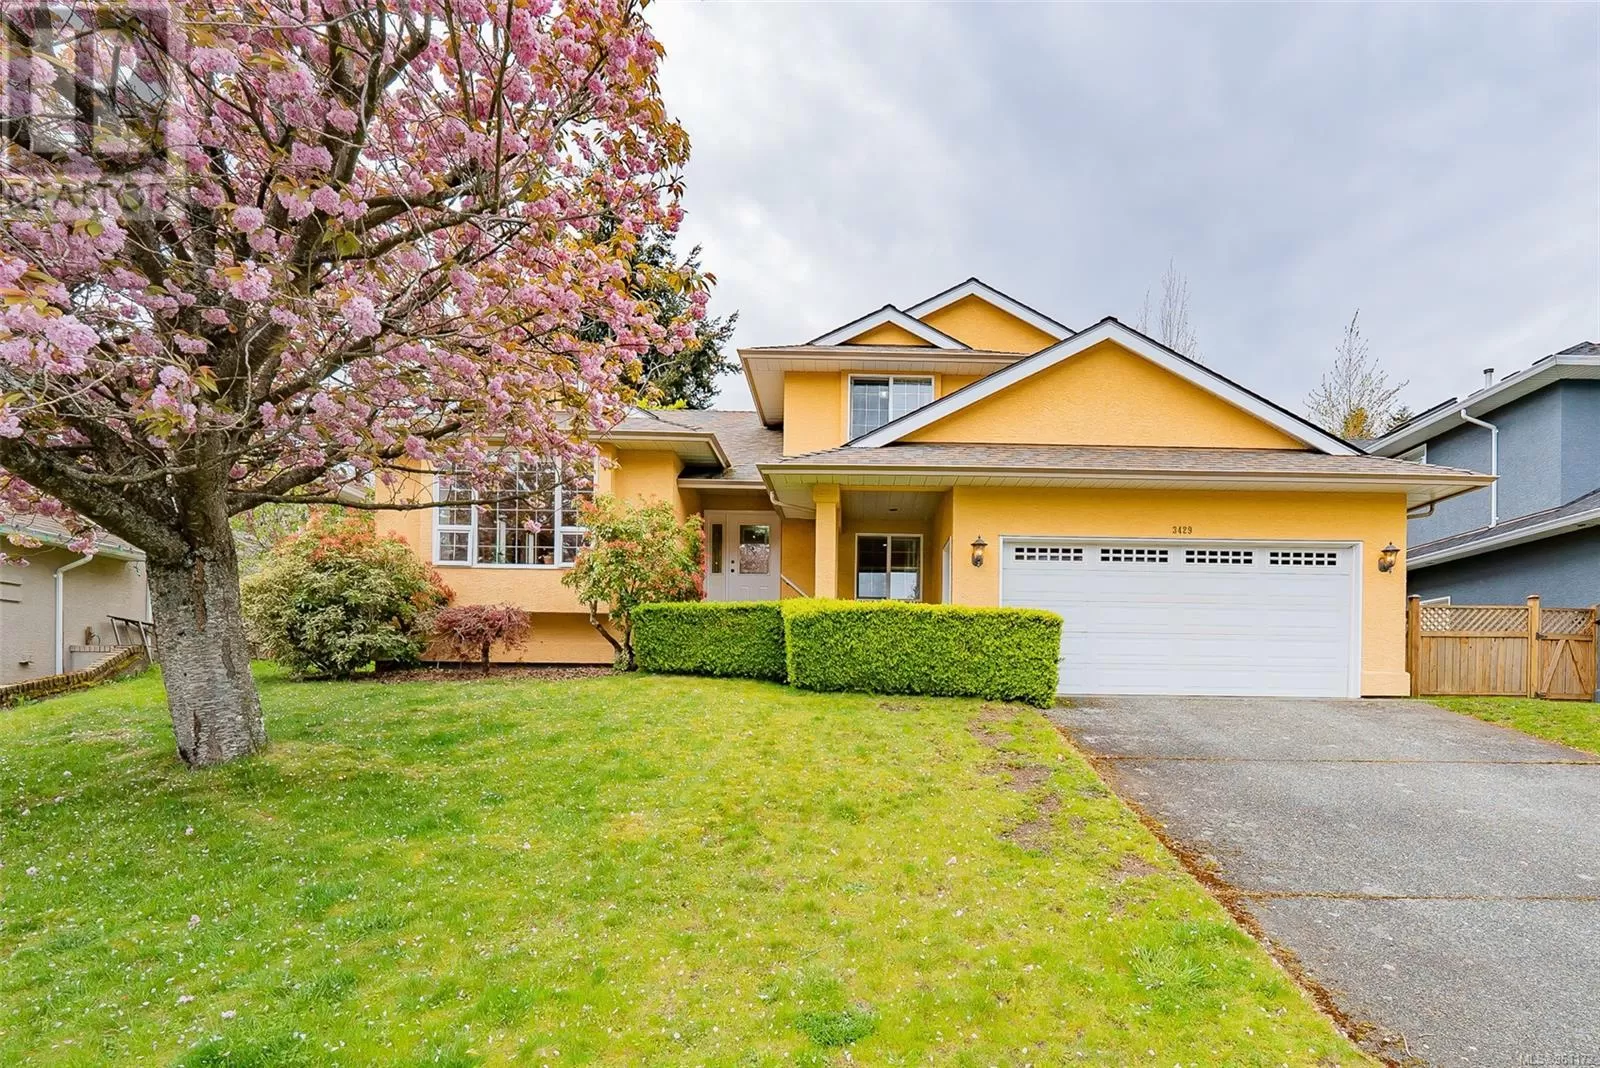 House for rent: 3429 Planta Rd, Nanaimo, British Columbia V9T 6E1